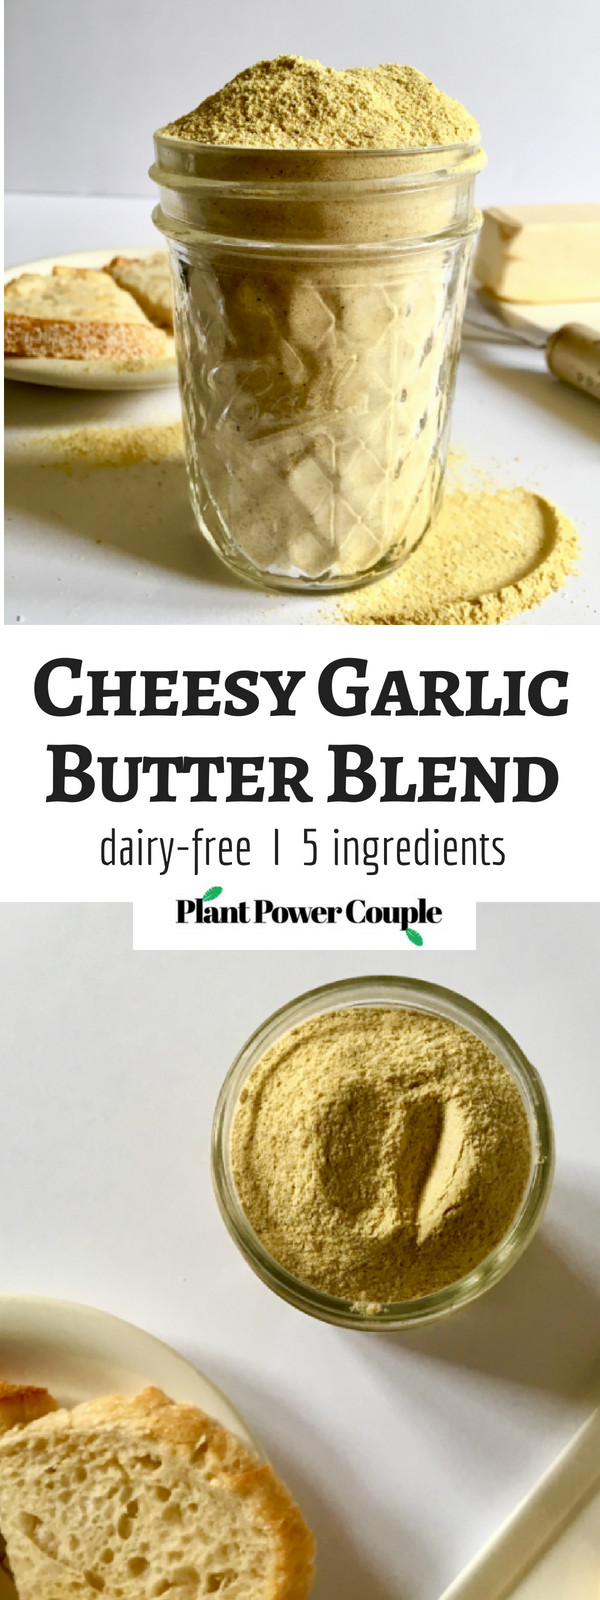 Dave'S Killer Bread Vegan
 Cheesy Garlic Butter Blend vegan spice mix